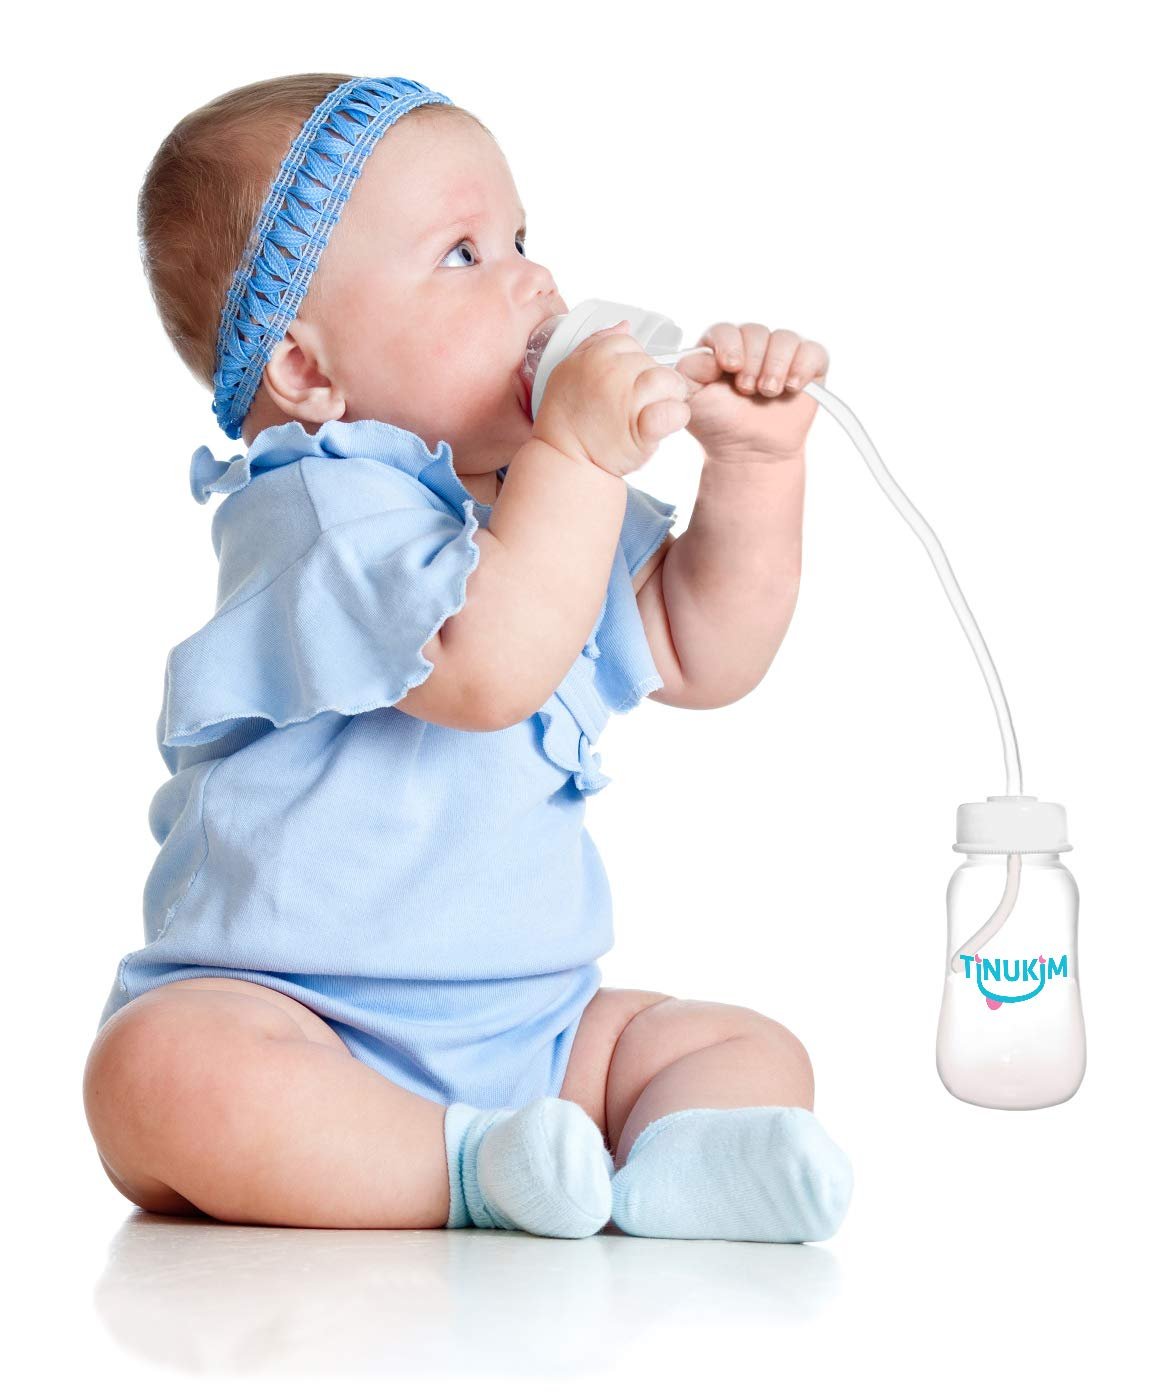 Tinukim iFeed Baby Bottle - Self-Feeding Tube, Anti-Colic Nursing, White - 2-Pack (4oz)